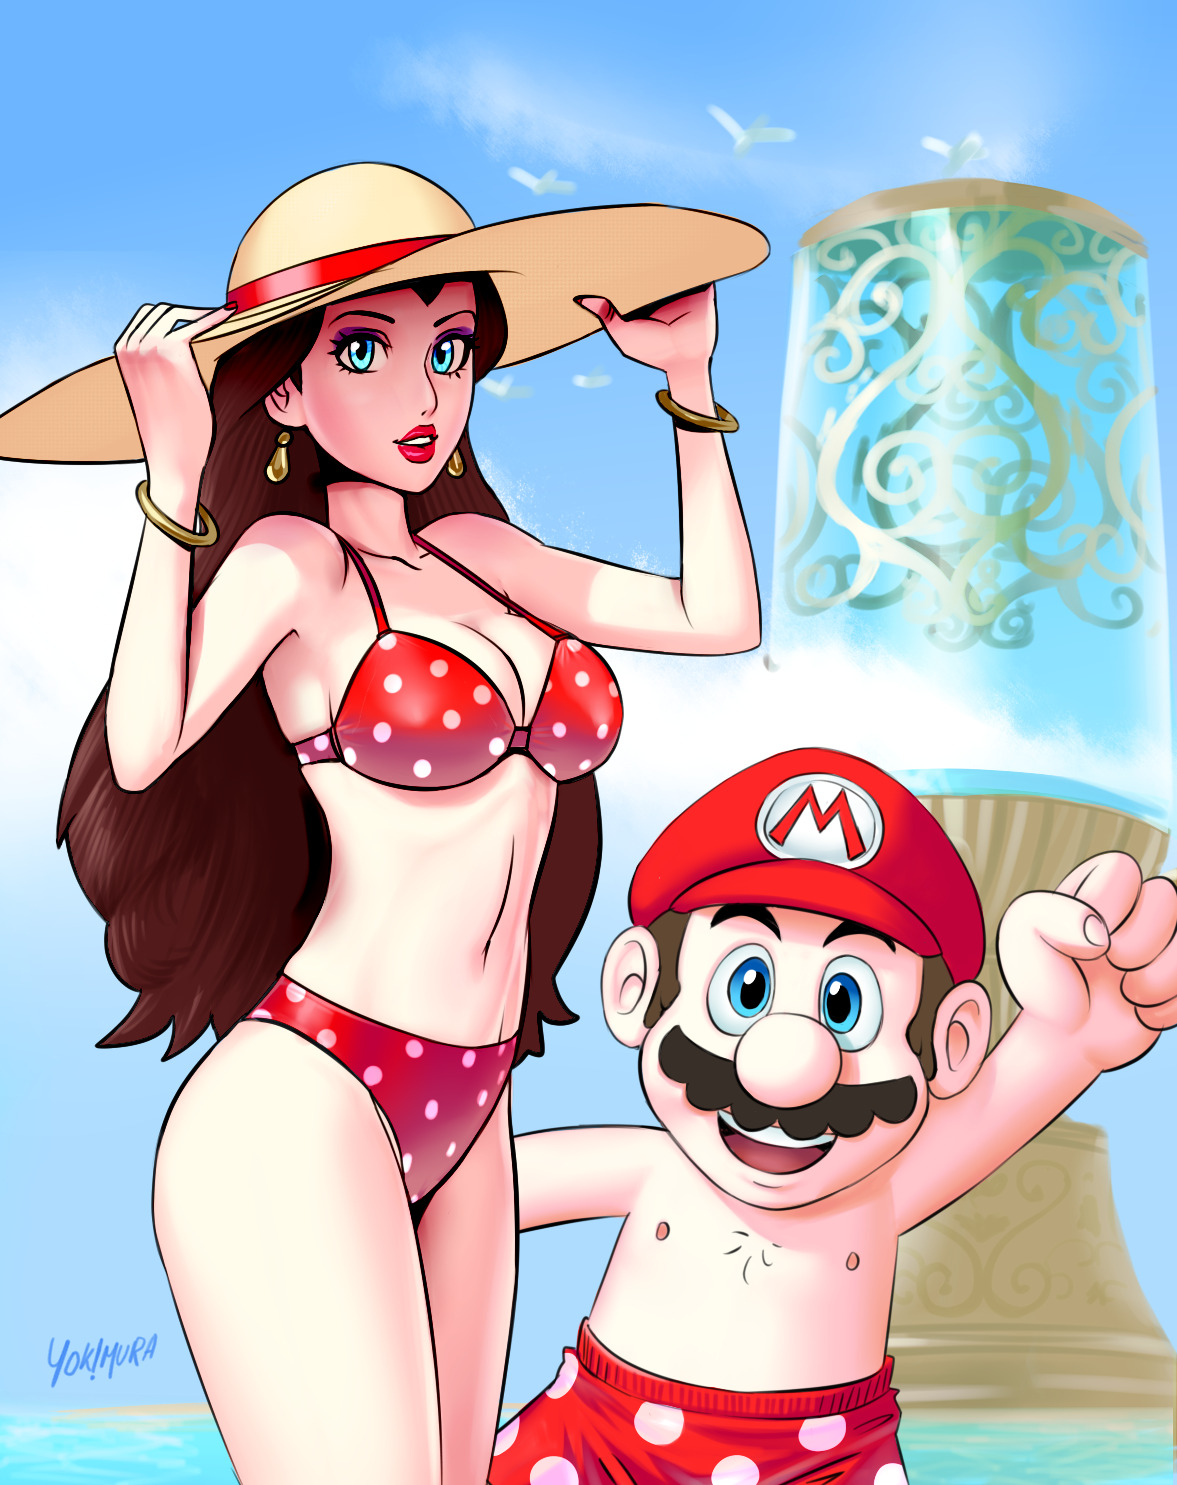 yokimura-art: Pauline and Mario, together at the beach.  Finally had enough free